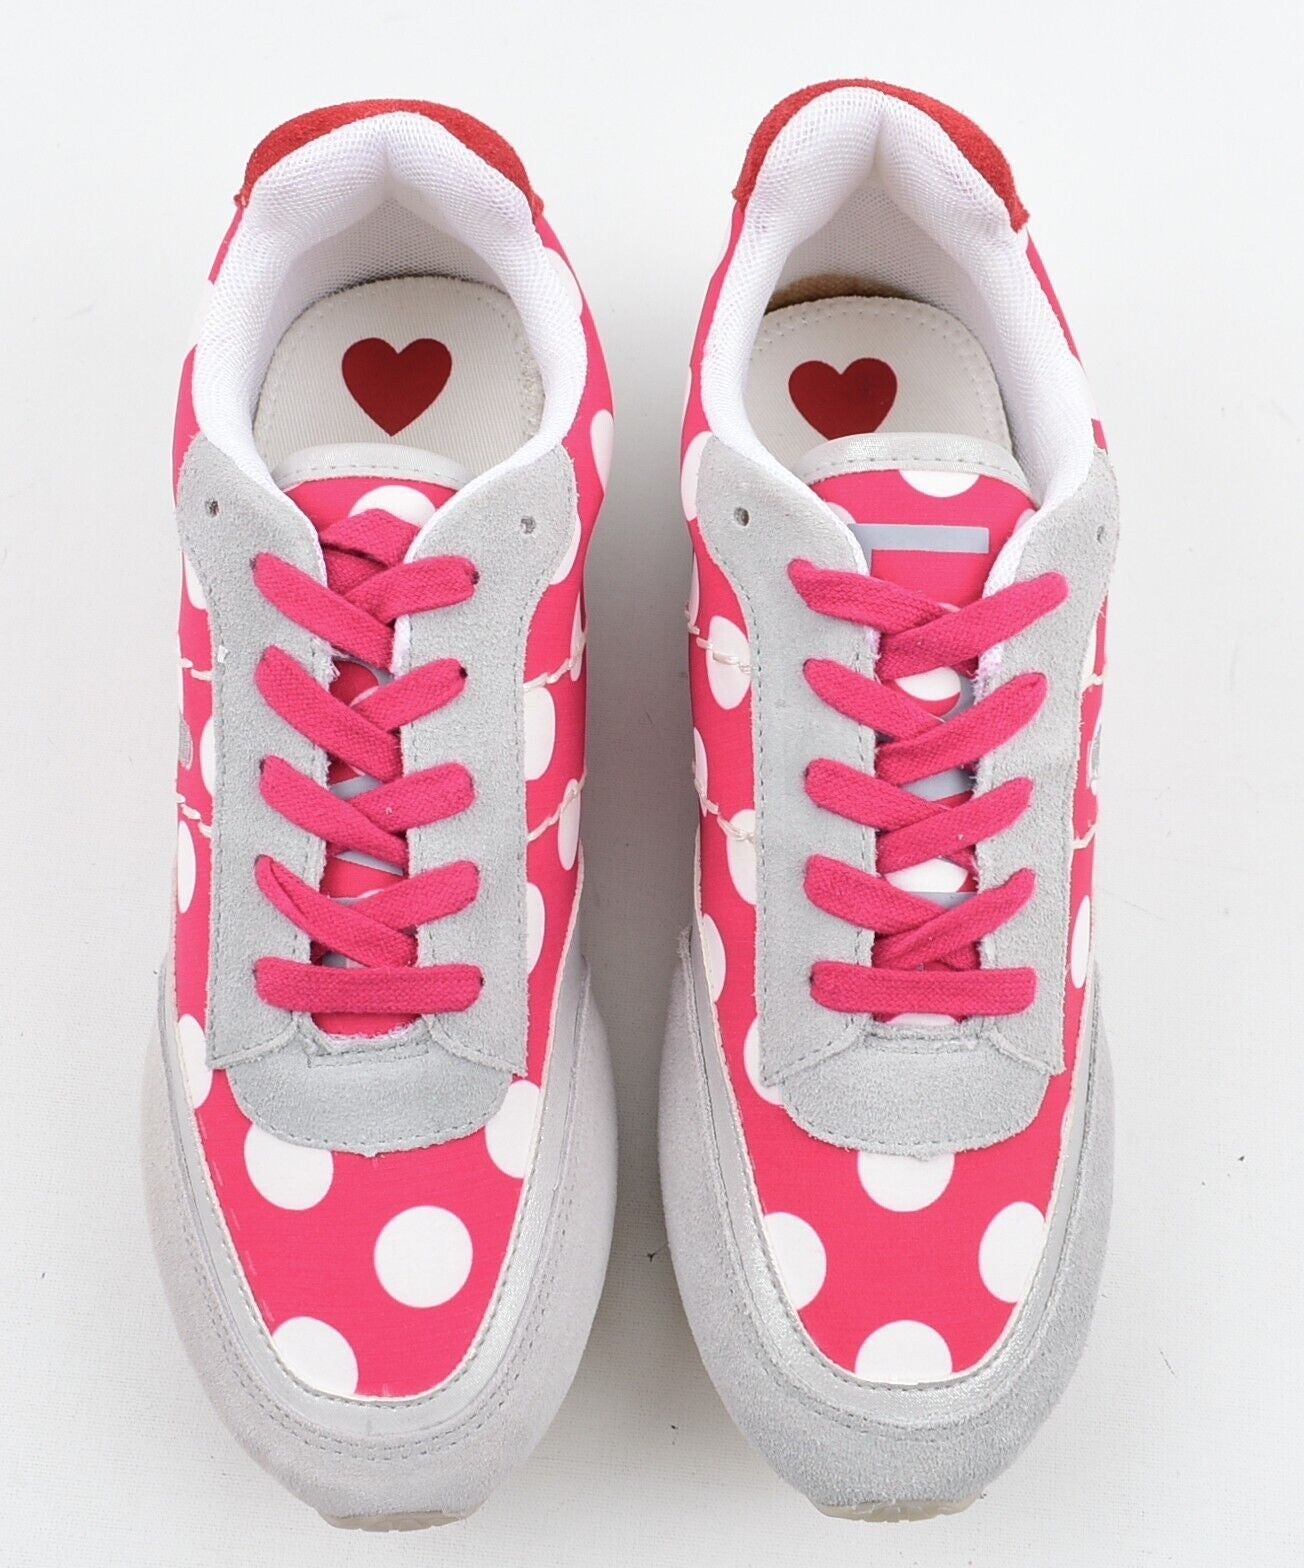 MOSCHINO Womens Polka Dot Trainers Sneakers, Grey/Pink, size UK 6 /EU 39